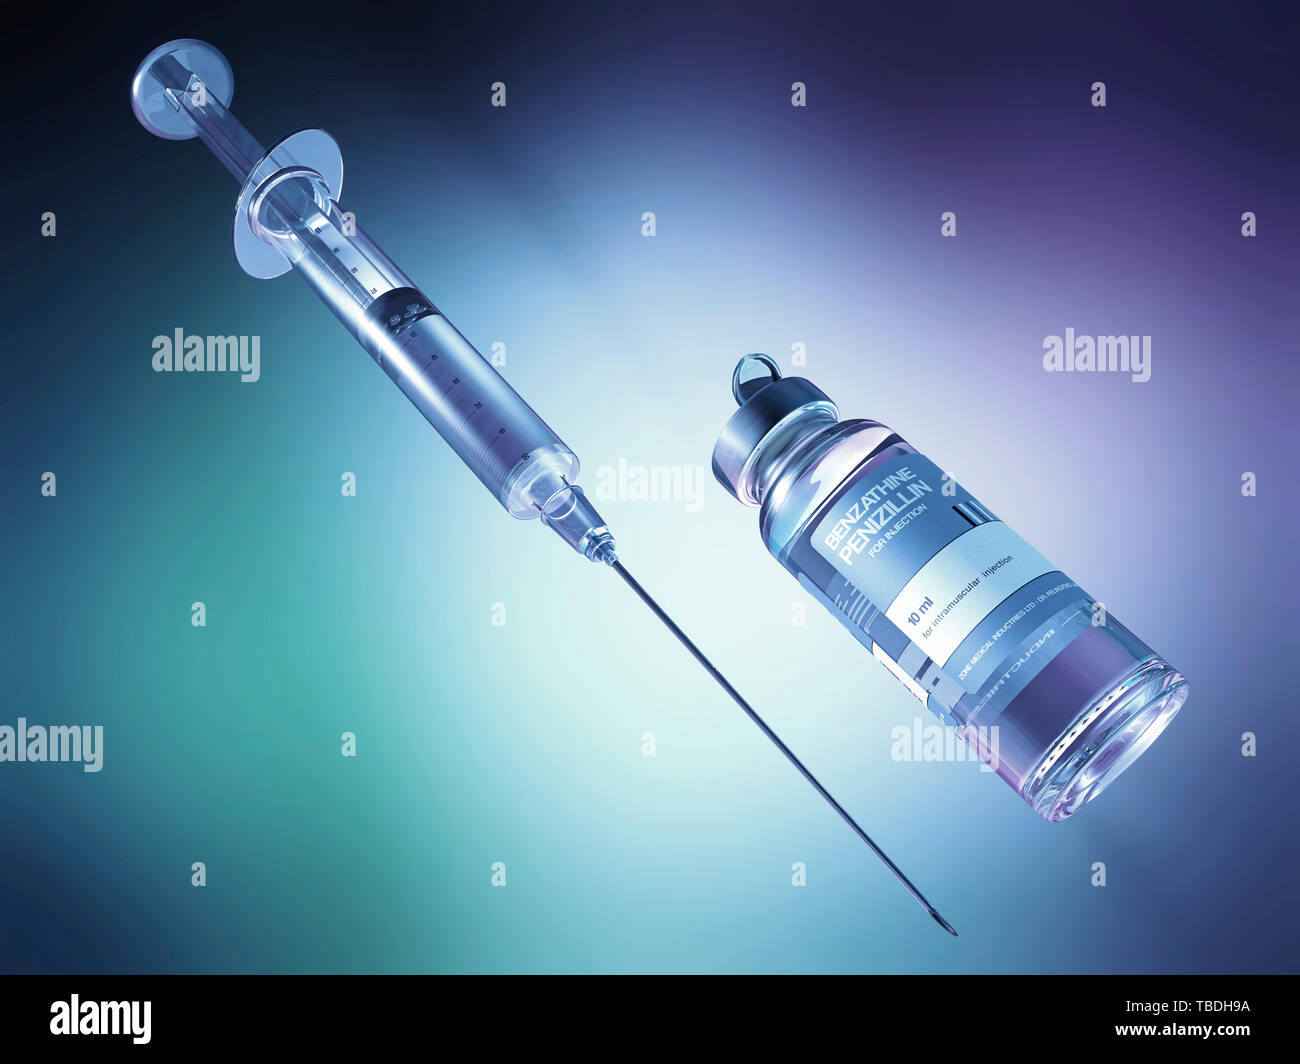 Syringe and a penicillin vial, illustration. Stock Photo